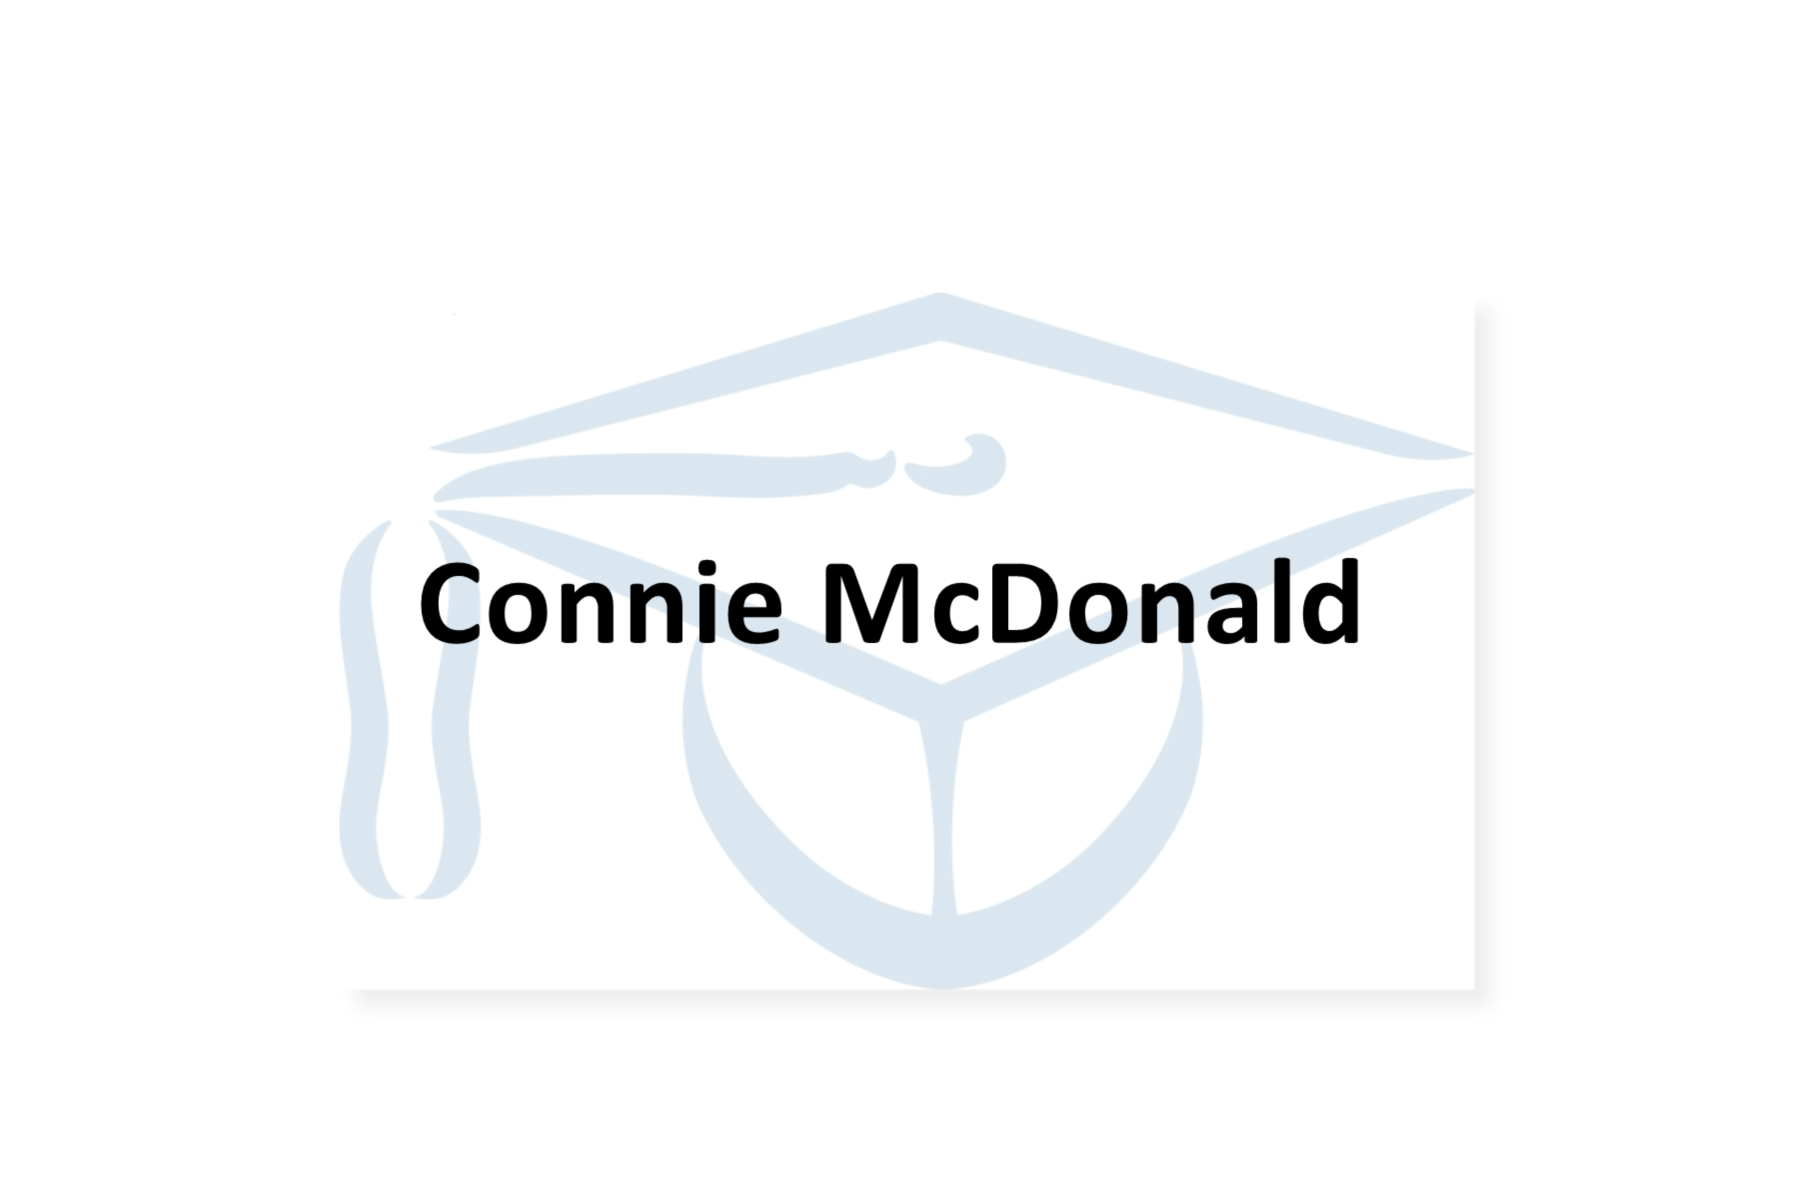 Connie McDonald